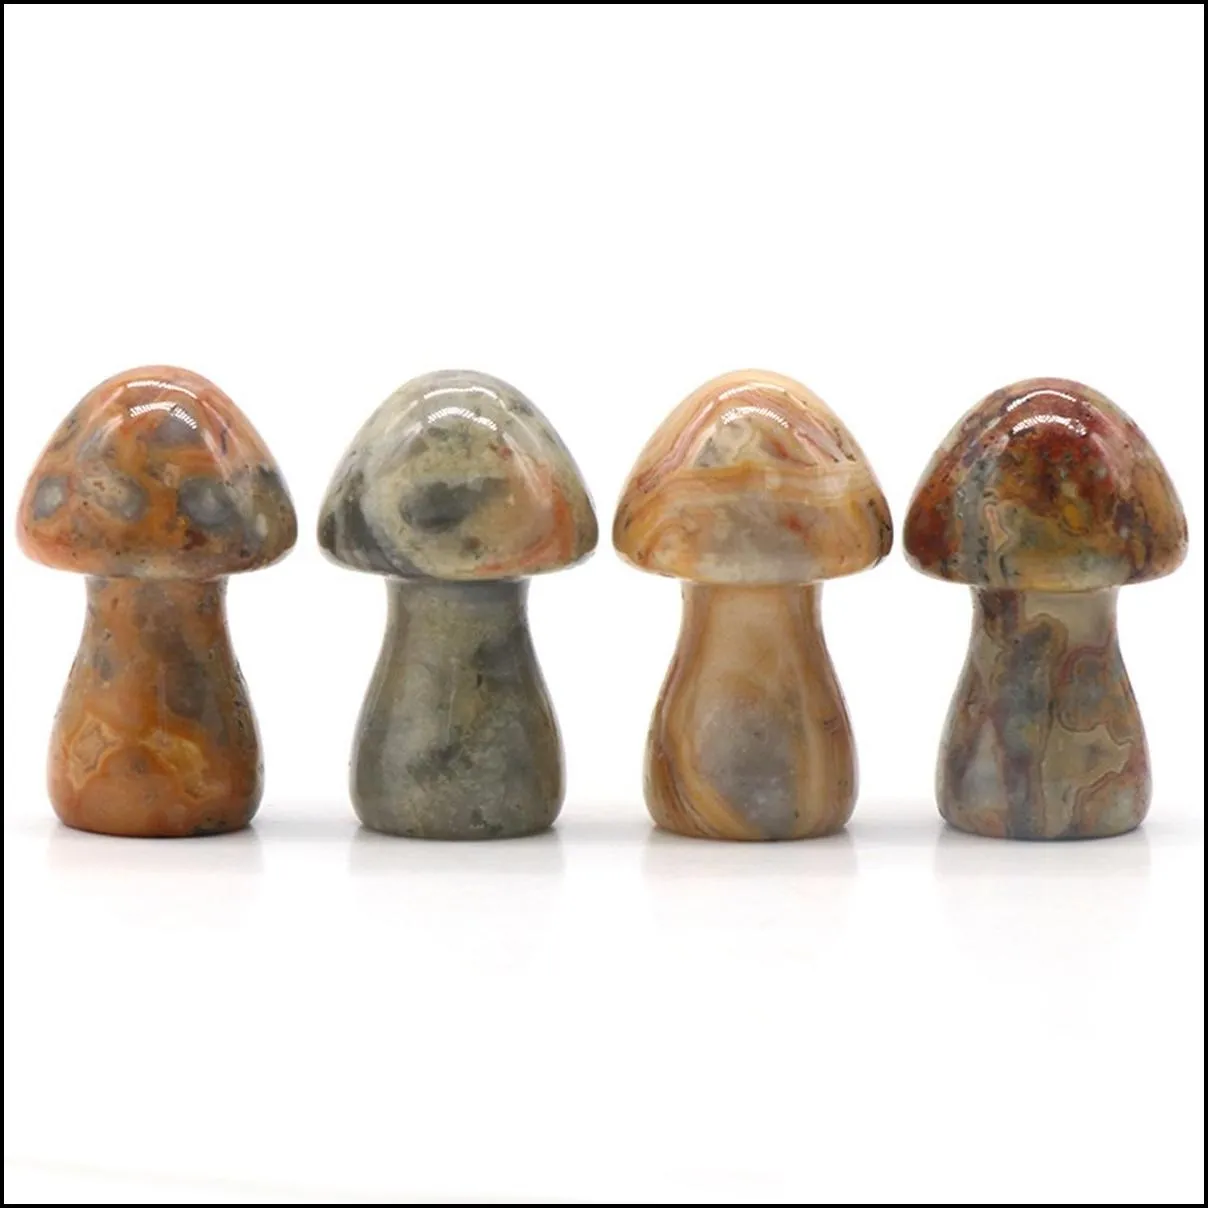 35mm natural red jasper gemstone crystal mushroom figurine healing stone statue carving crafts home decoration